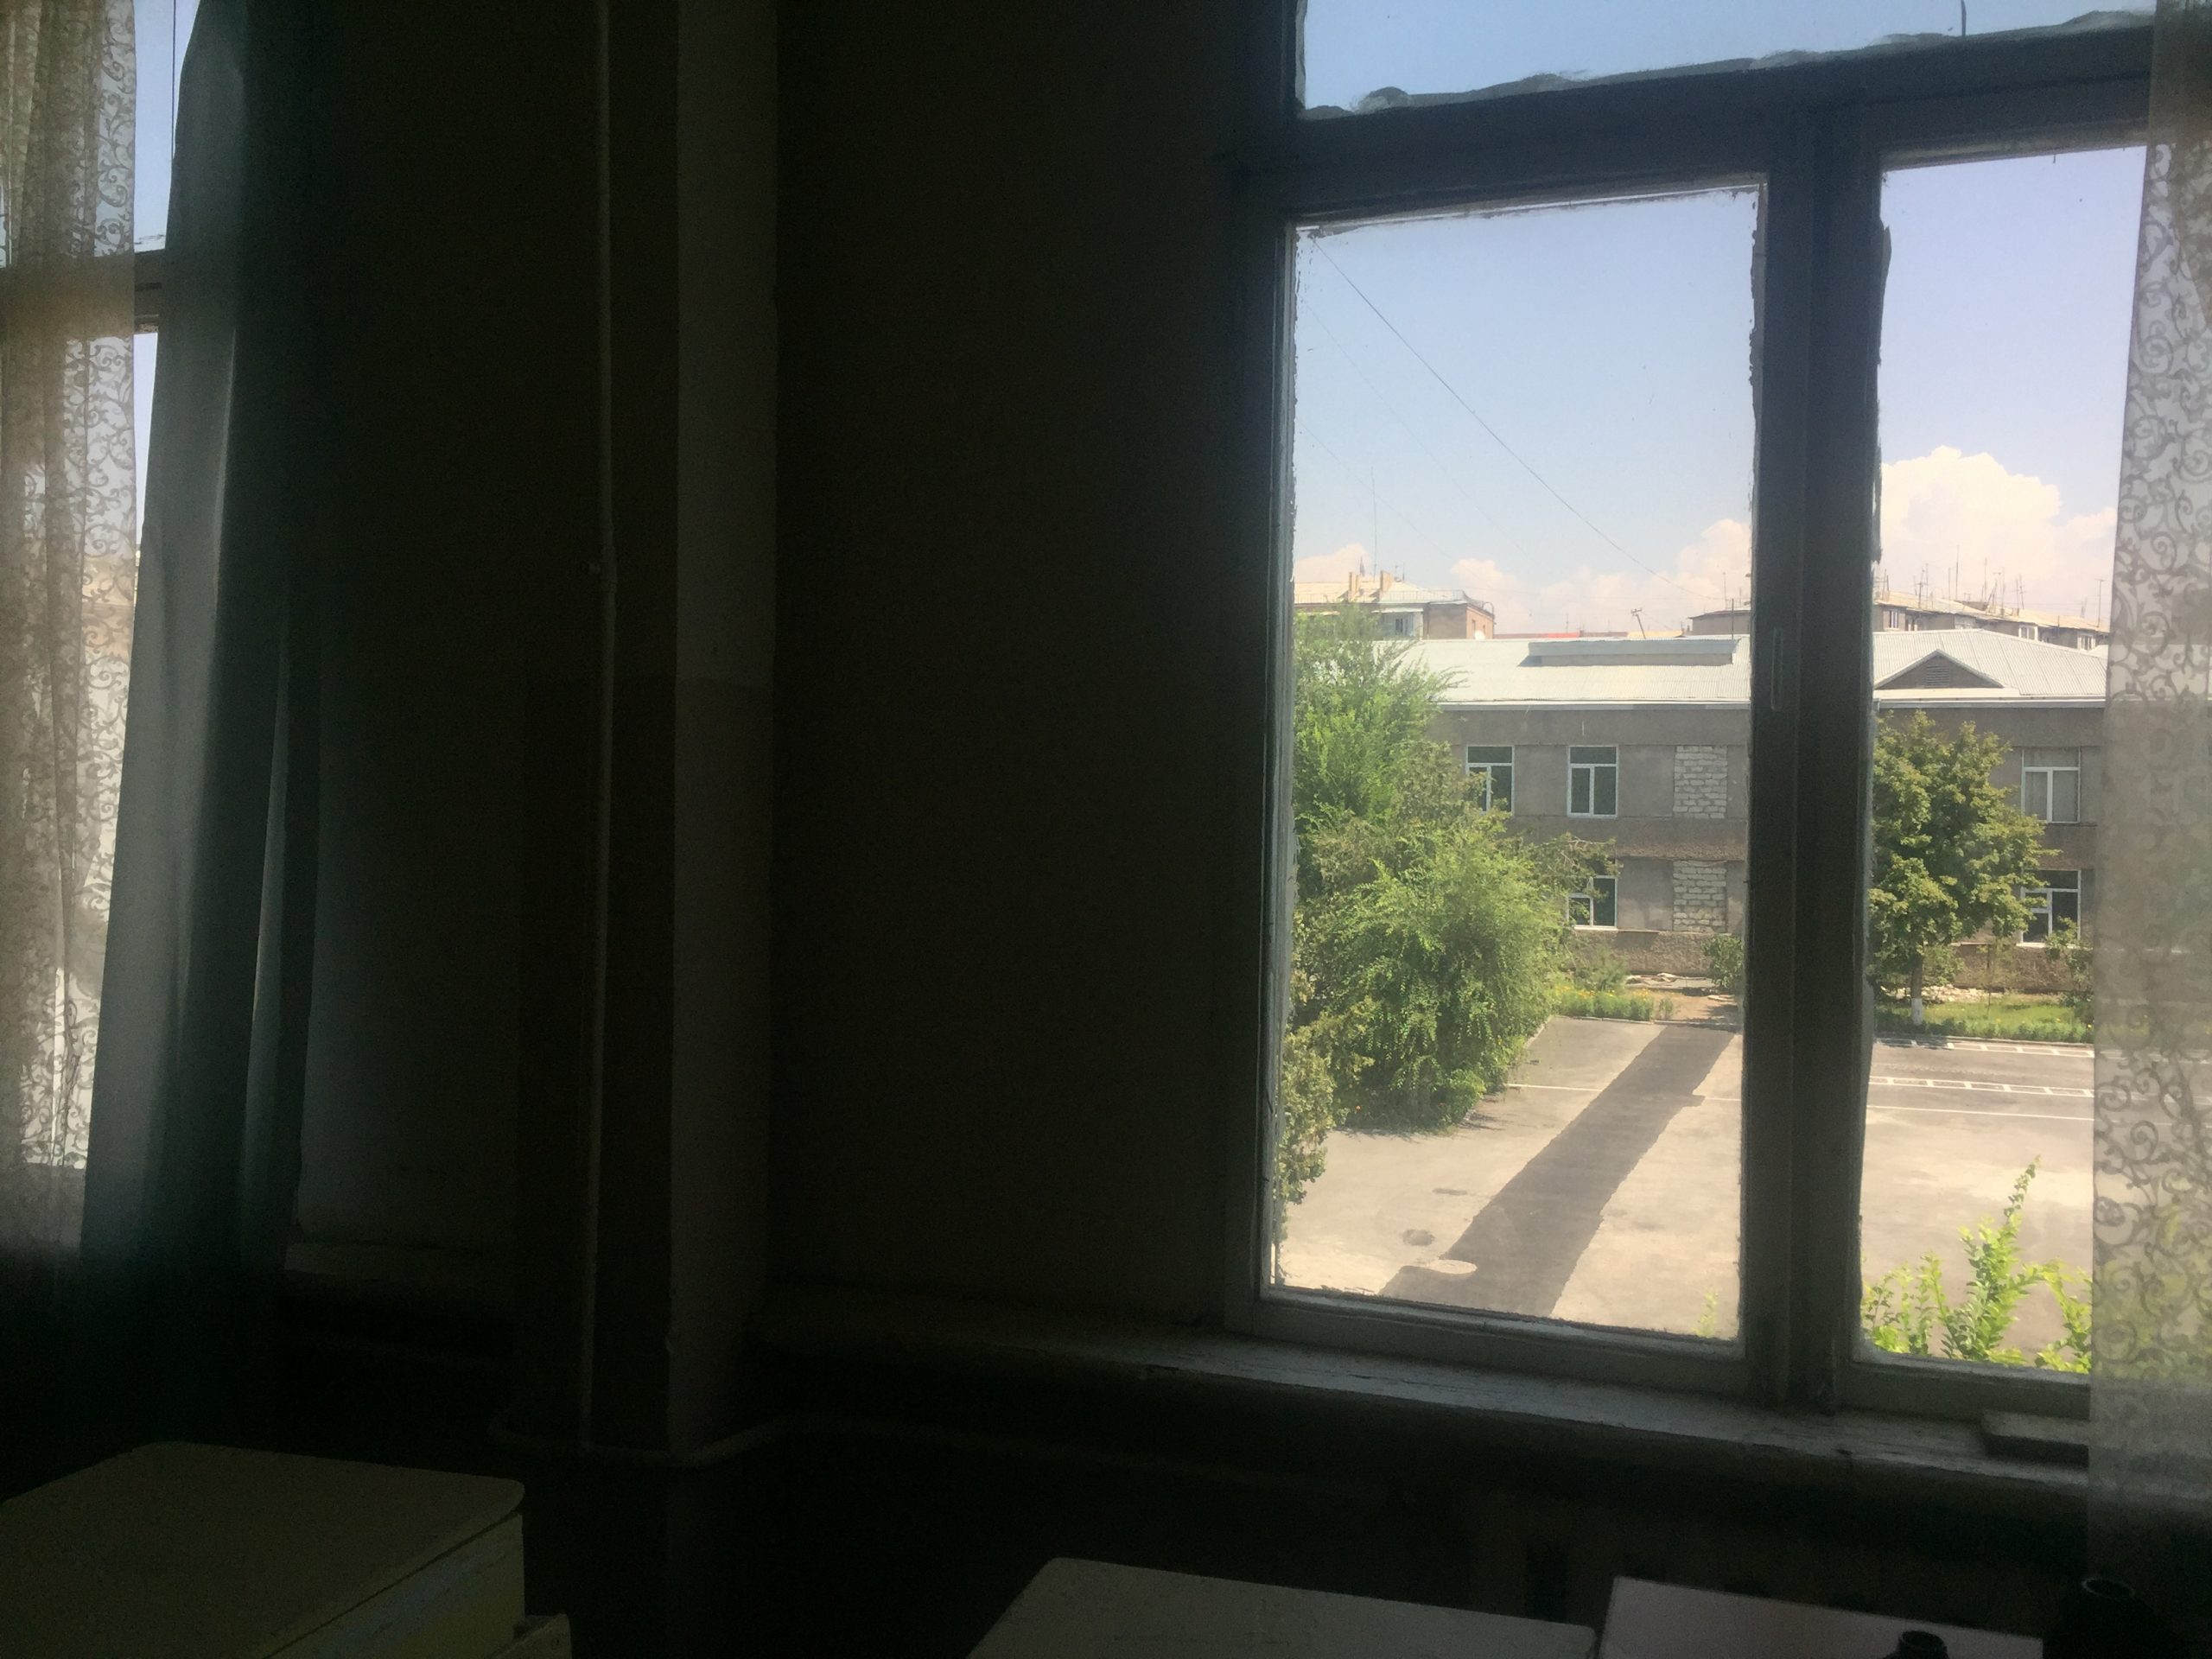 KV-school-windows-1-scaled